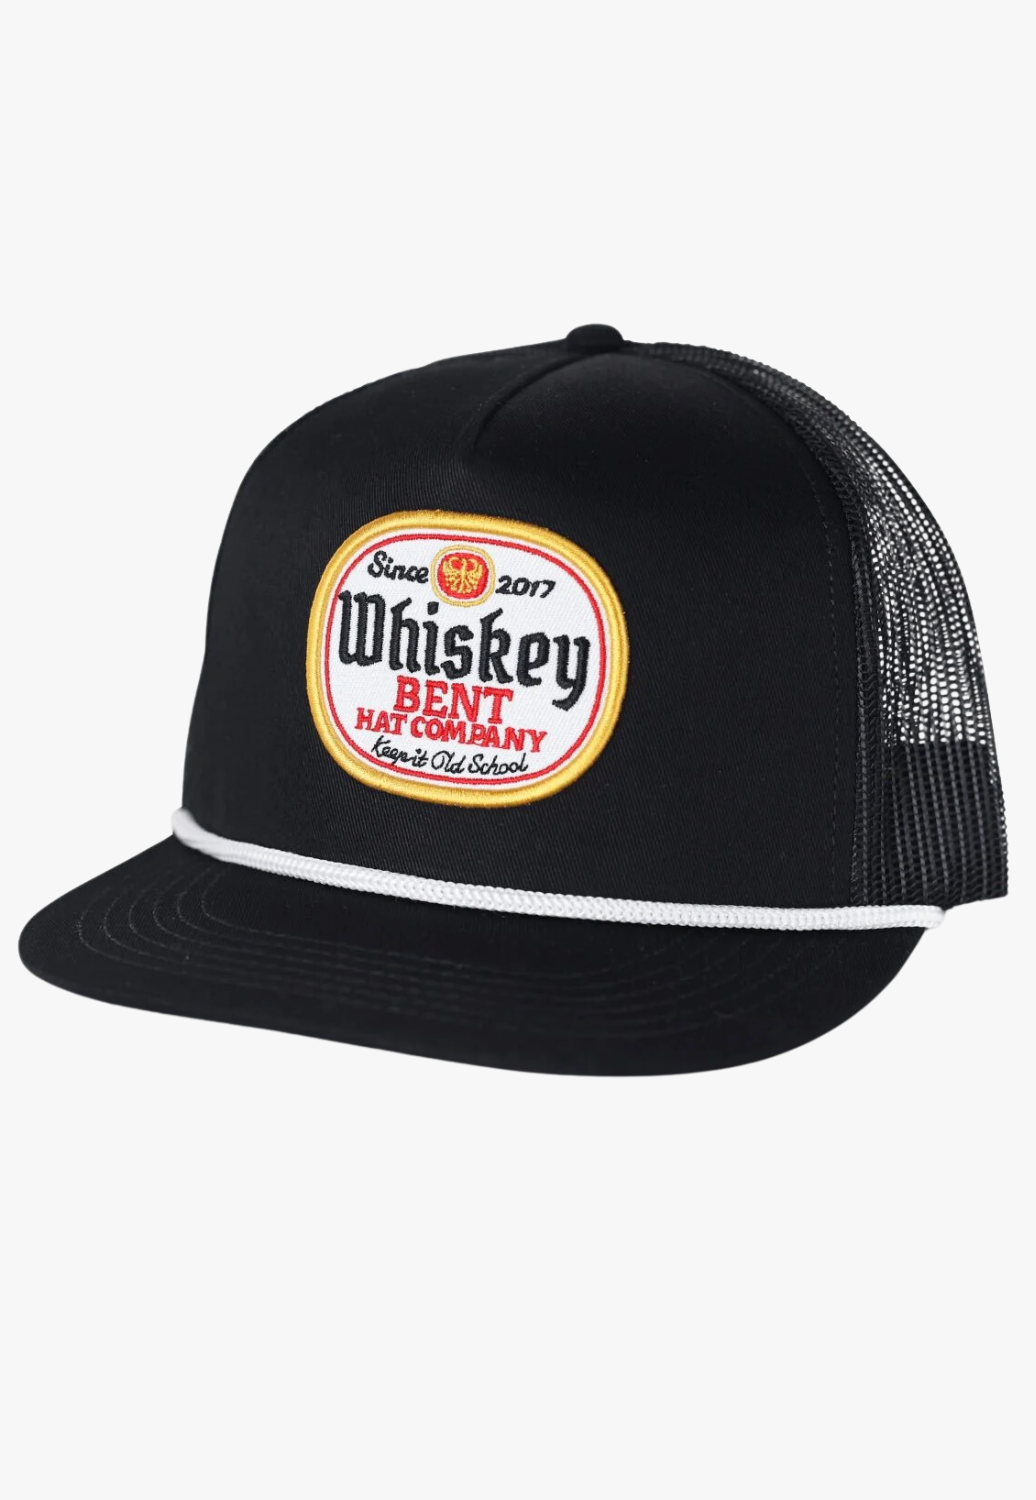 Whiskey Bent Hat Co Black Label Cap